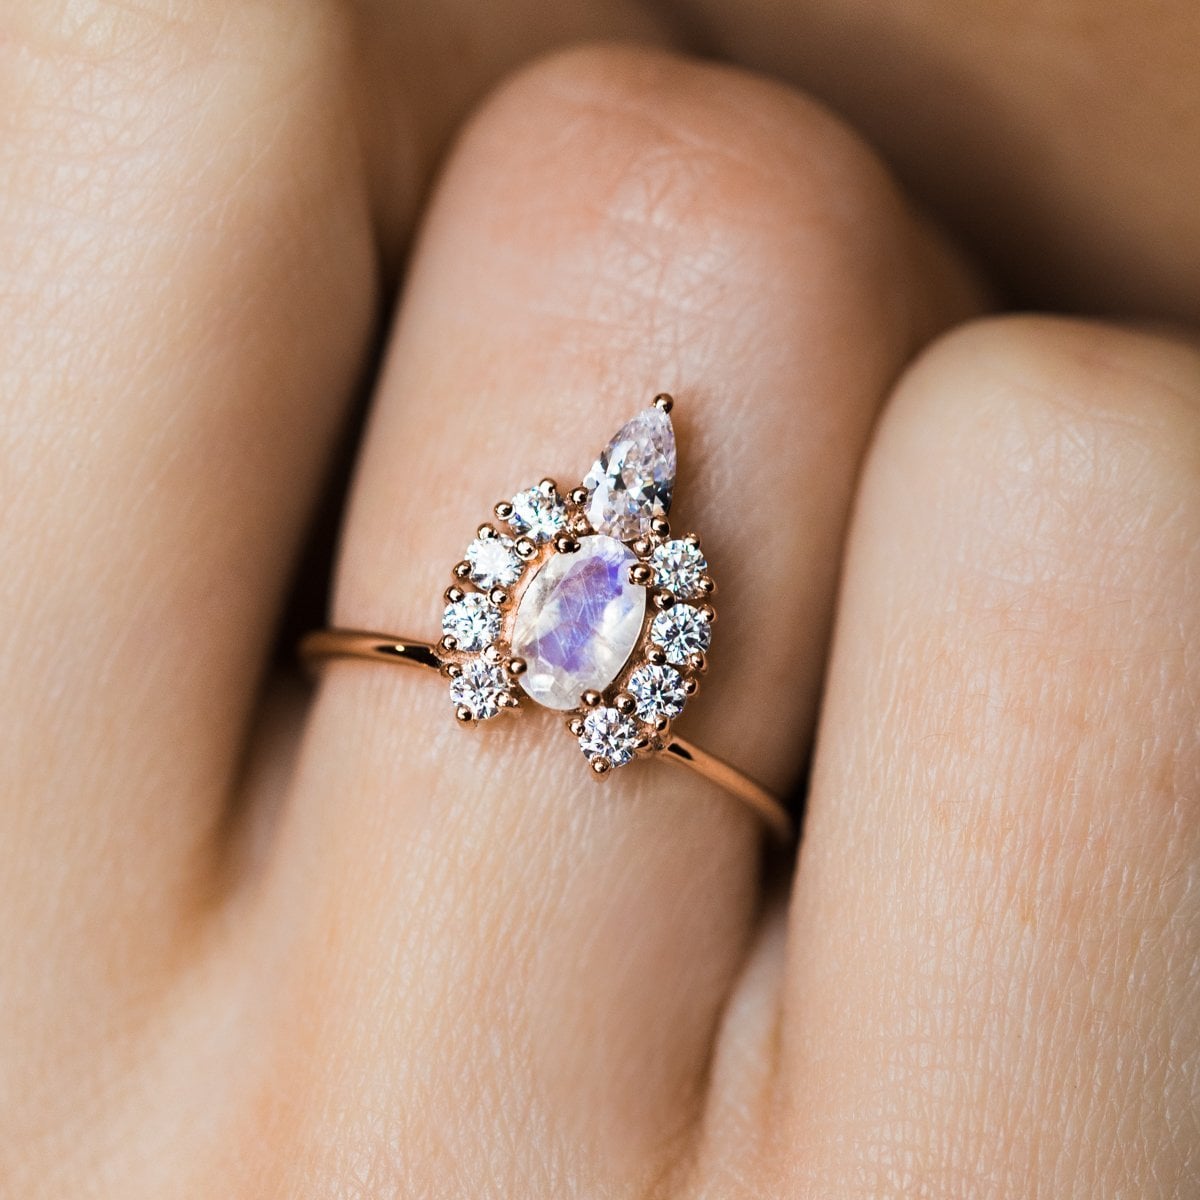 F&F Jewelry Luxury Purple Amethyst Jewelry Engagement Rings For Women Wedding Bridal rings 